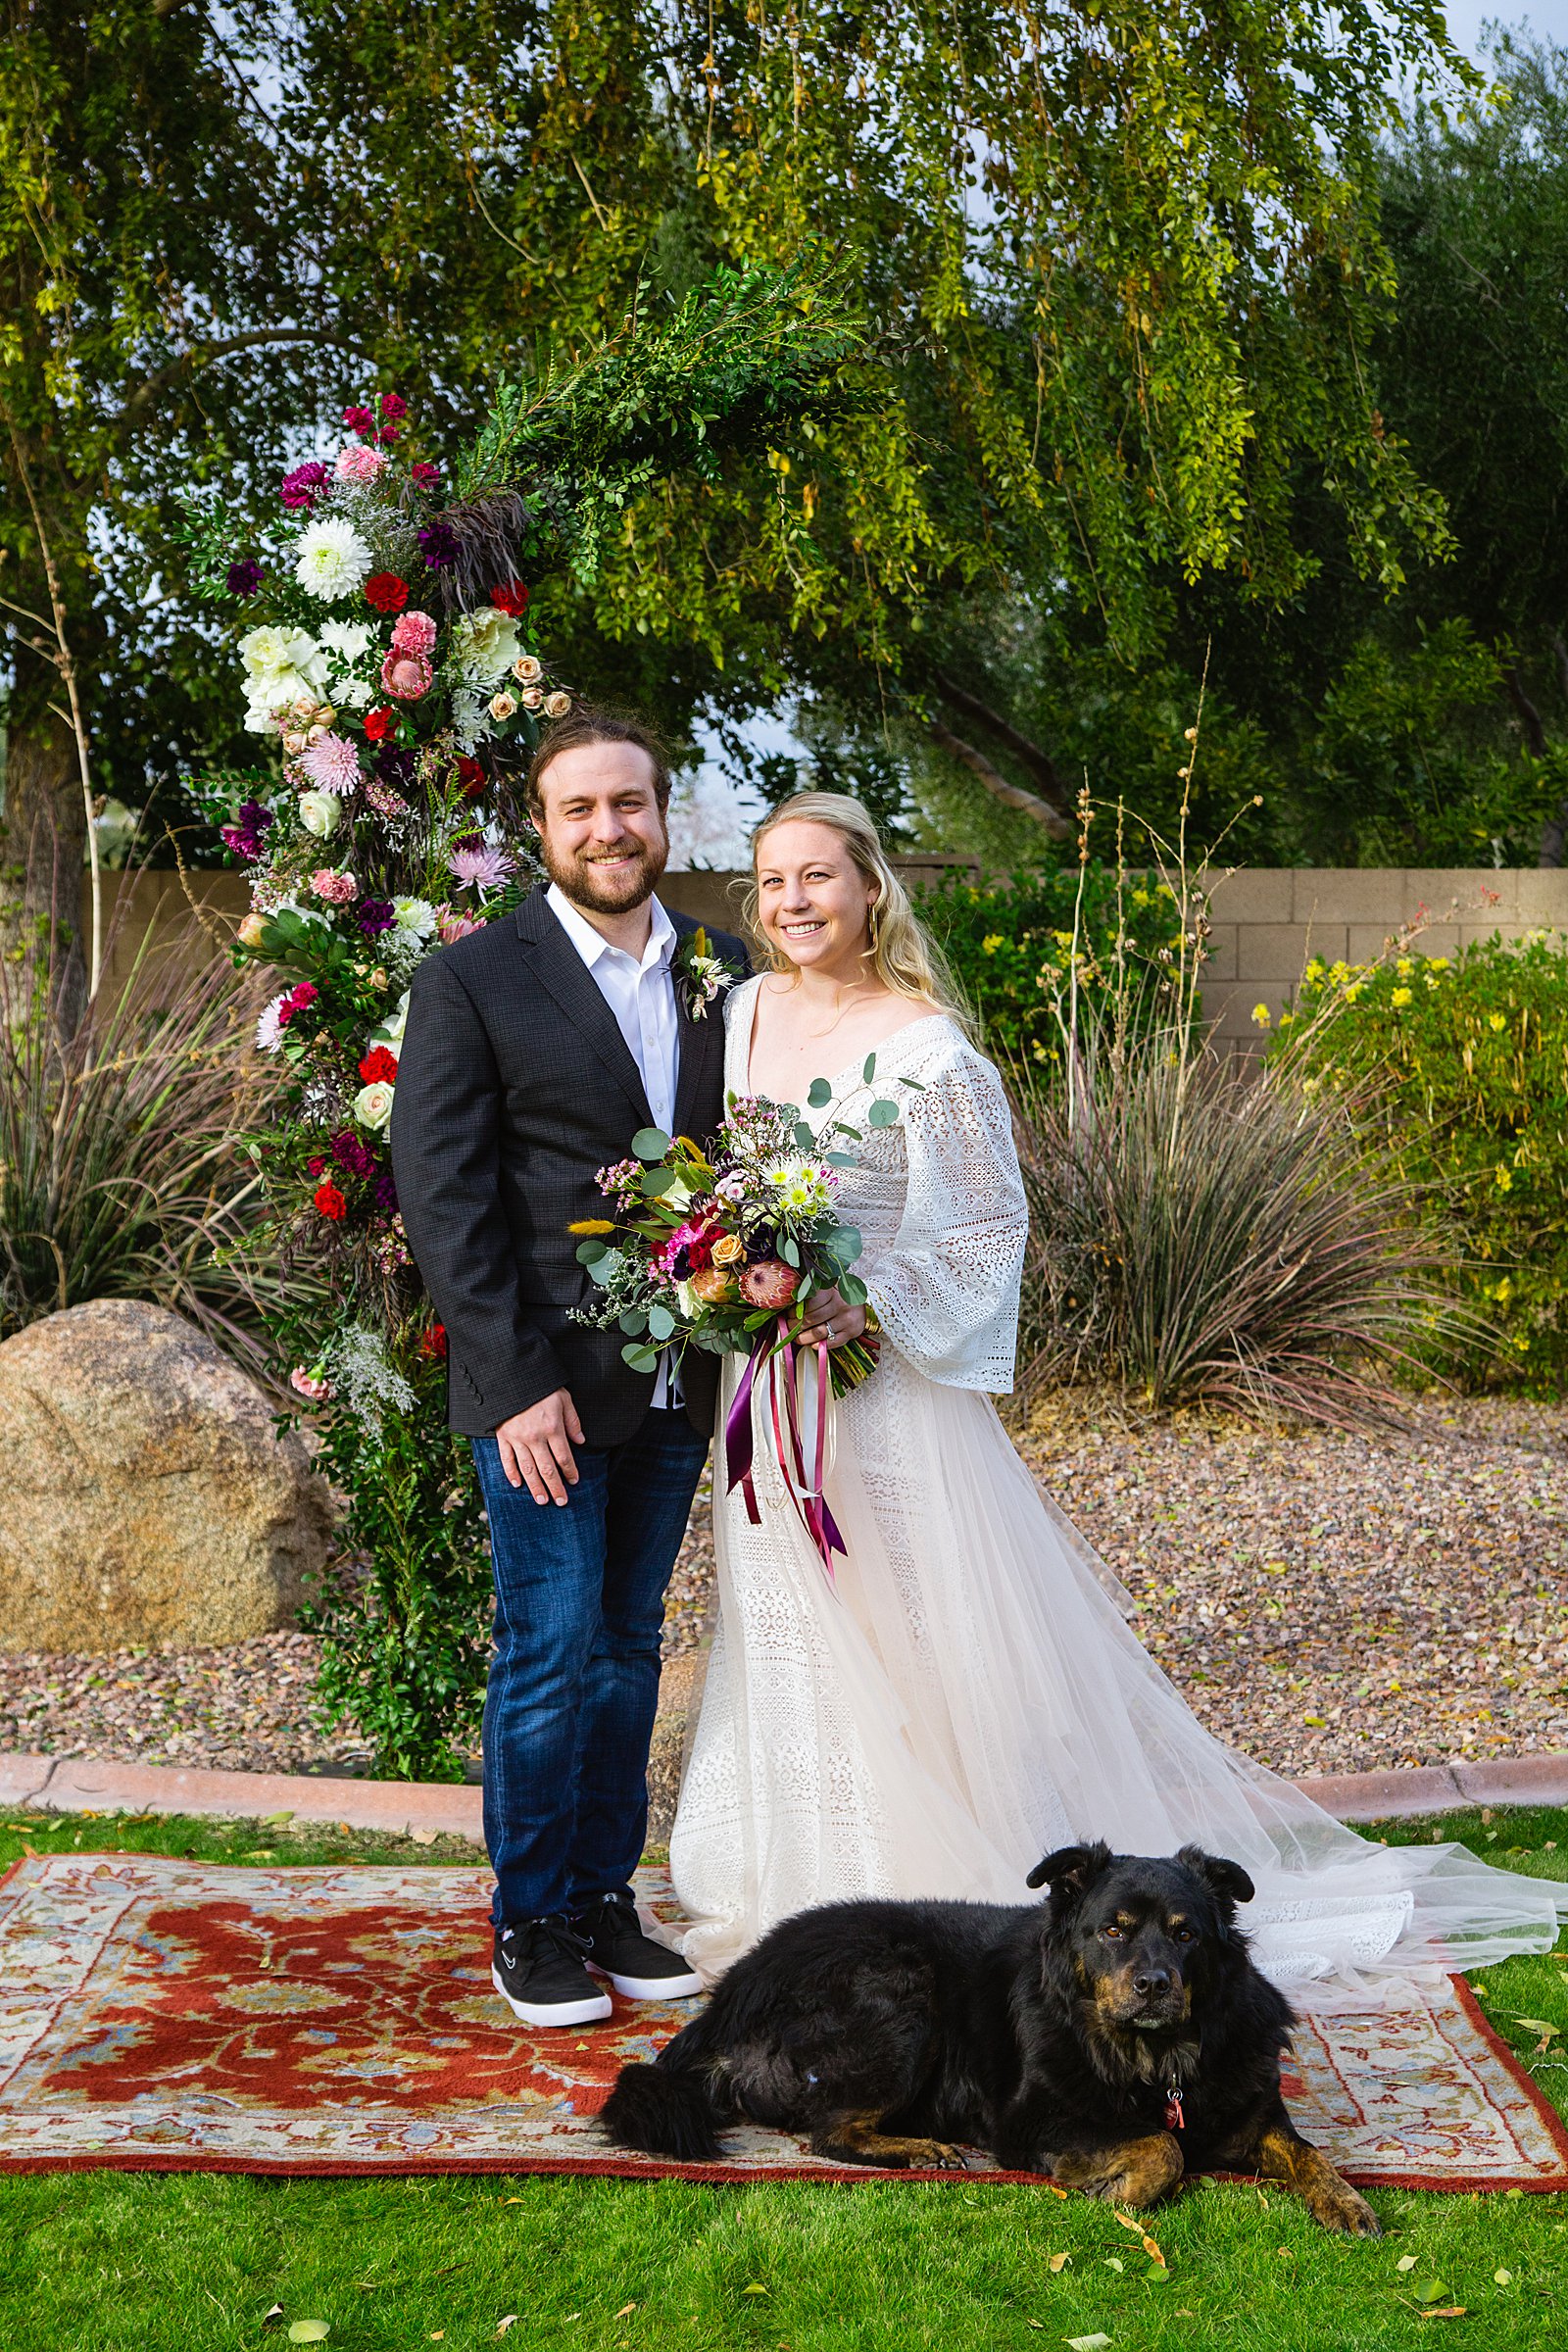 Bride and Groom pose with their dog during their Backyard wedding by Arizona wedding photographer PMA Photography.